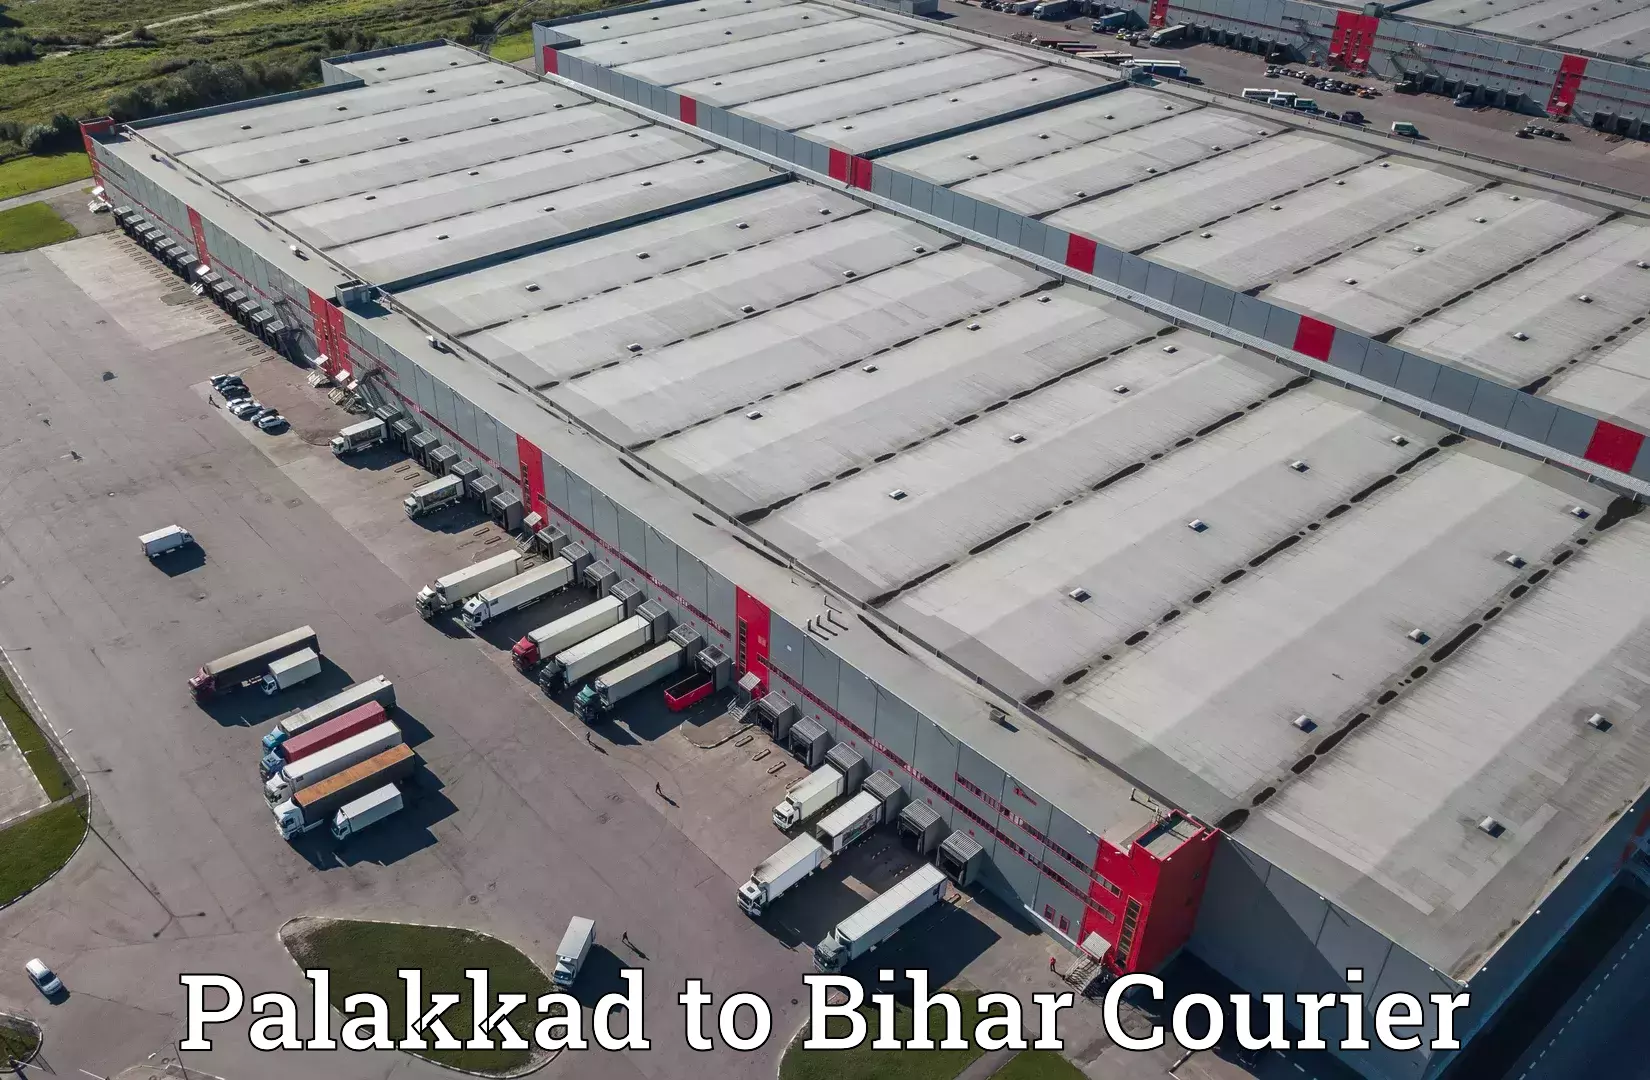 Courier service comparison Palakkad to Bihar